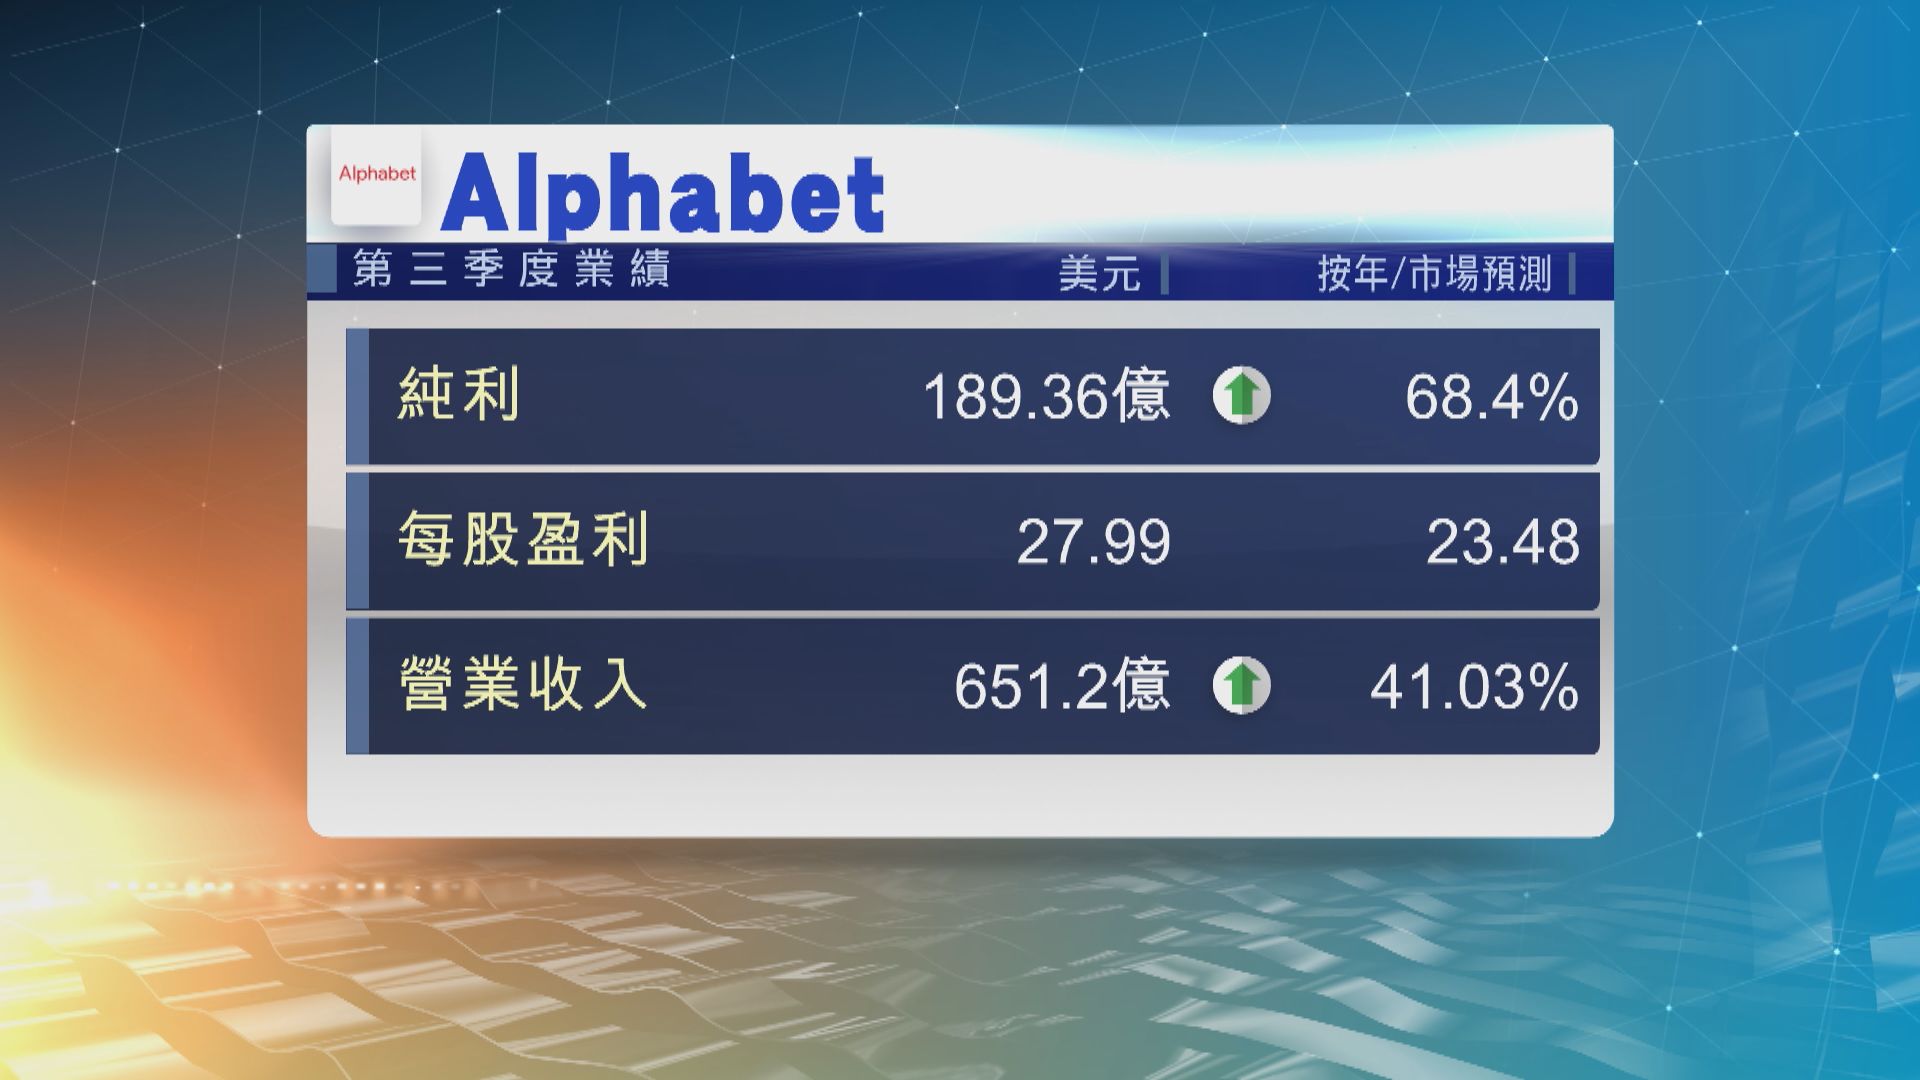 Alphabet純利升68%至189.36億美元 